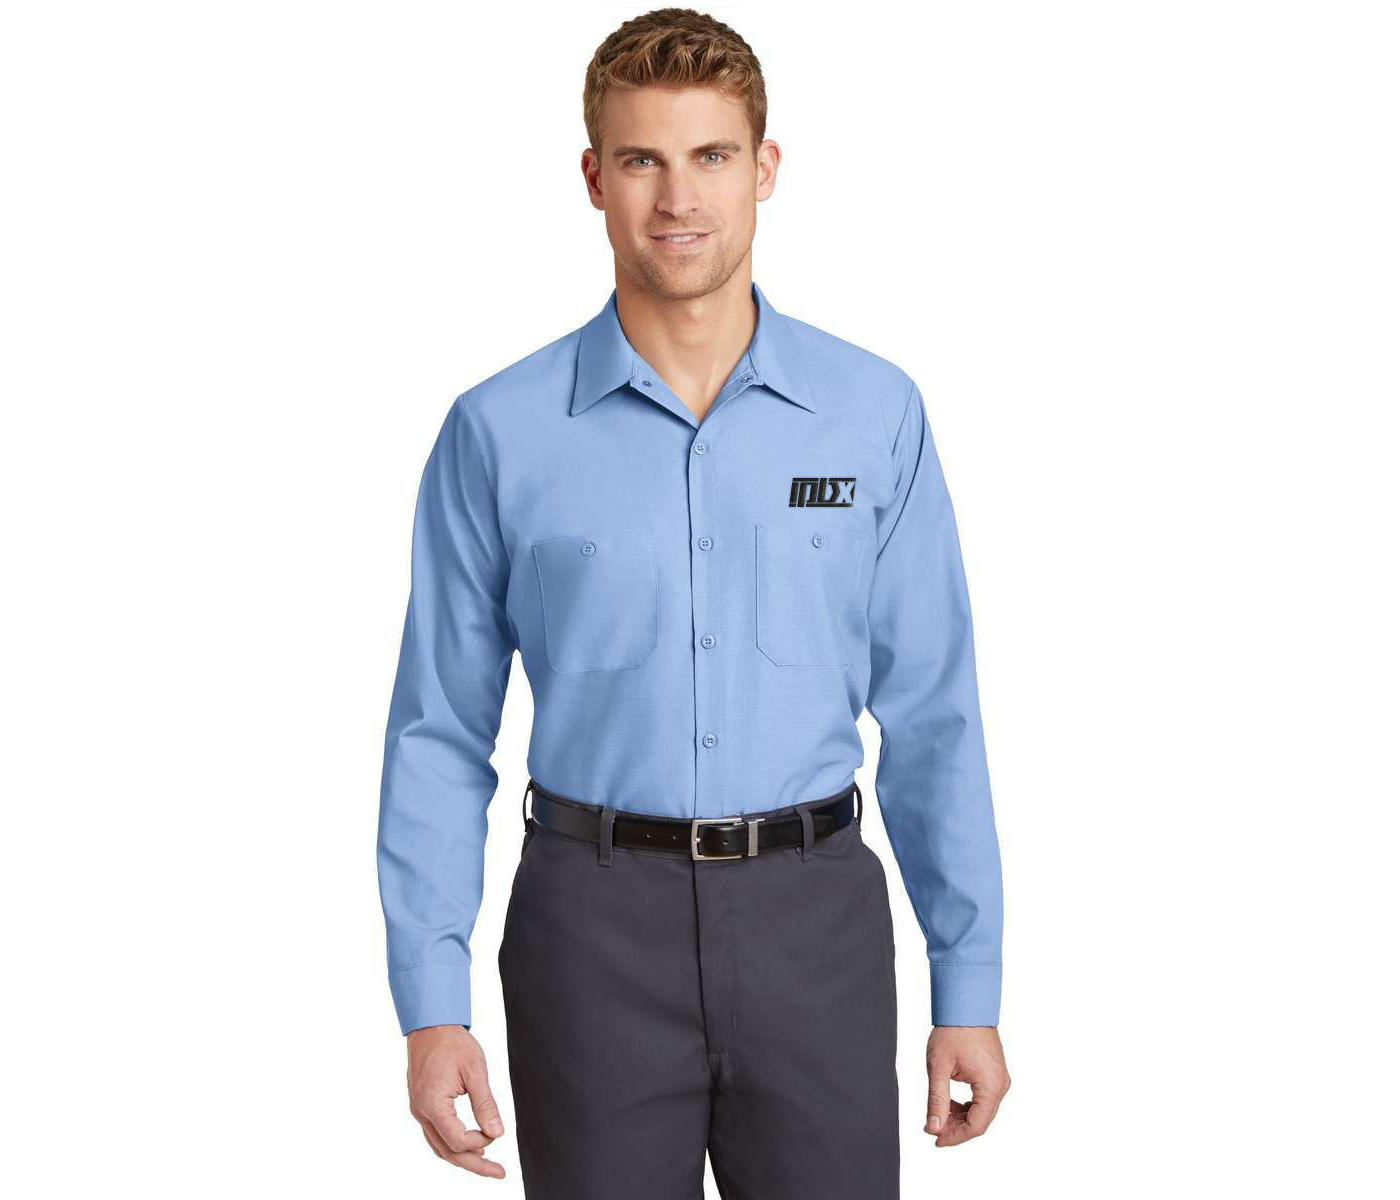 Red Kap Long Sleeve Industrial Work Shirt